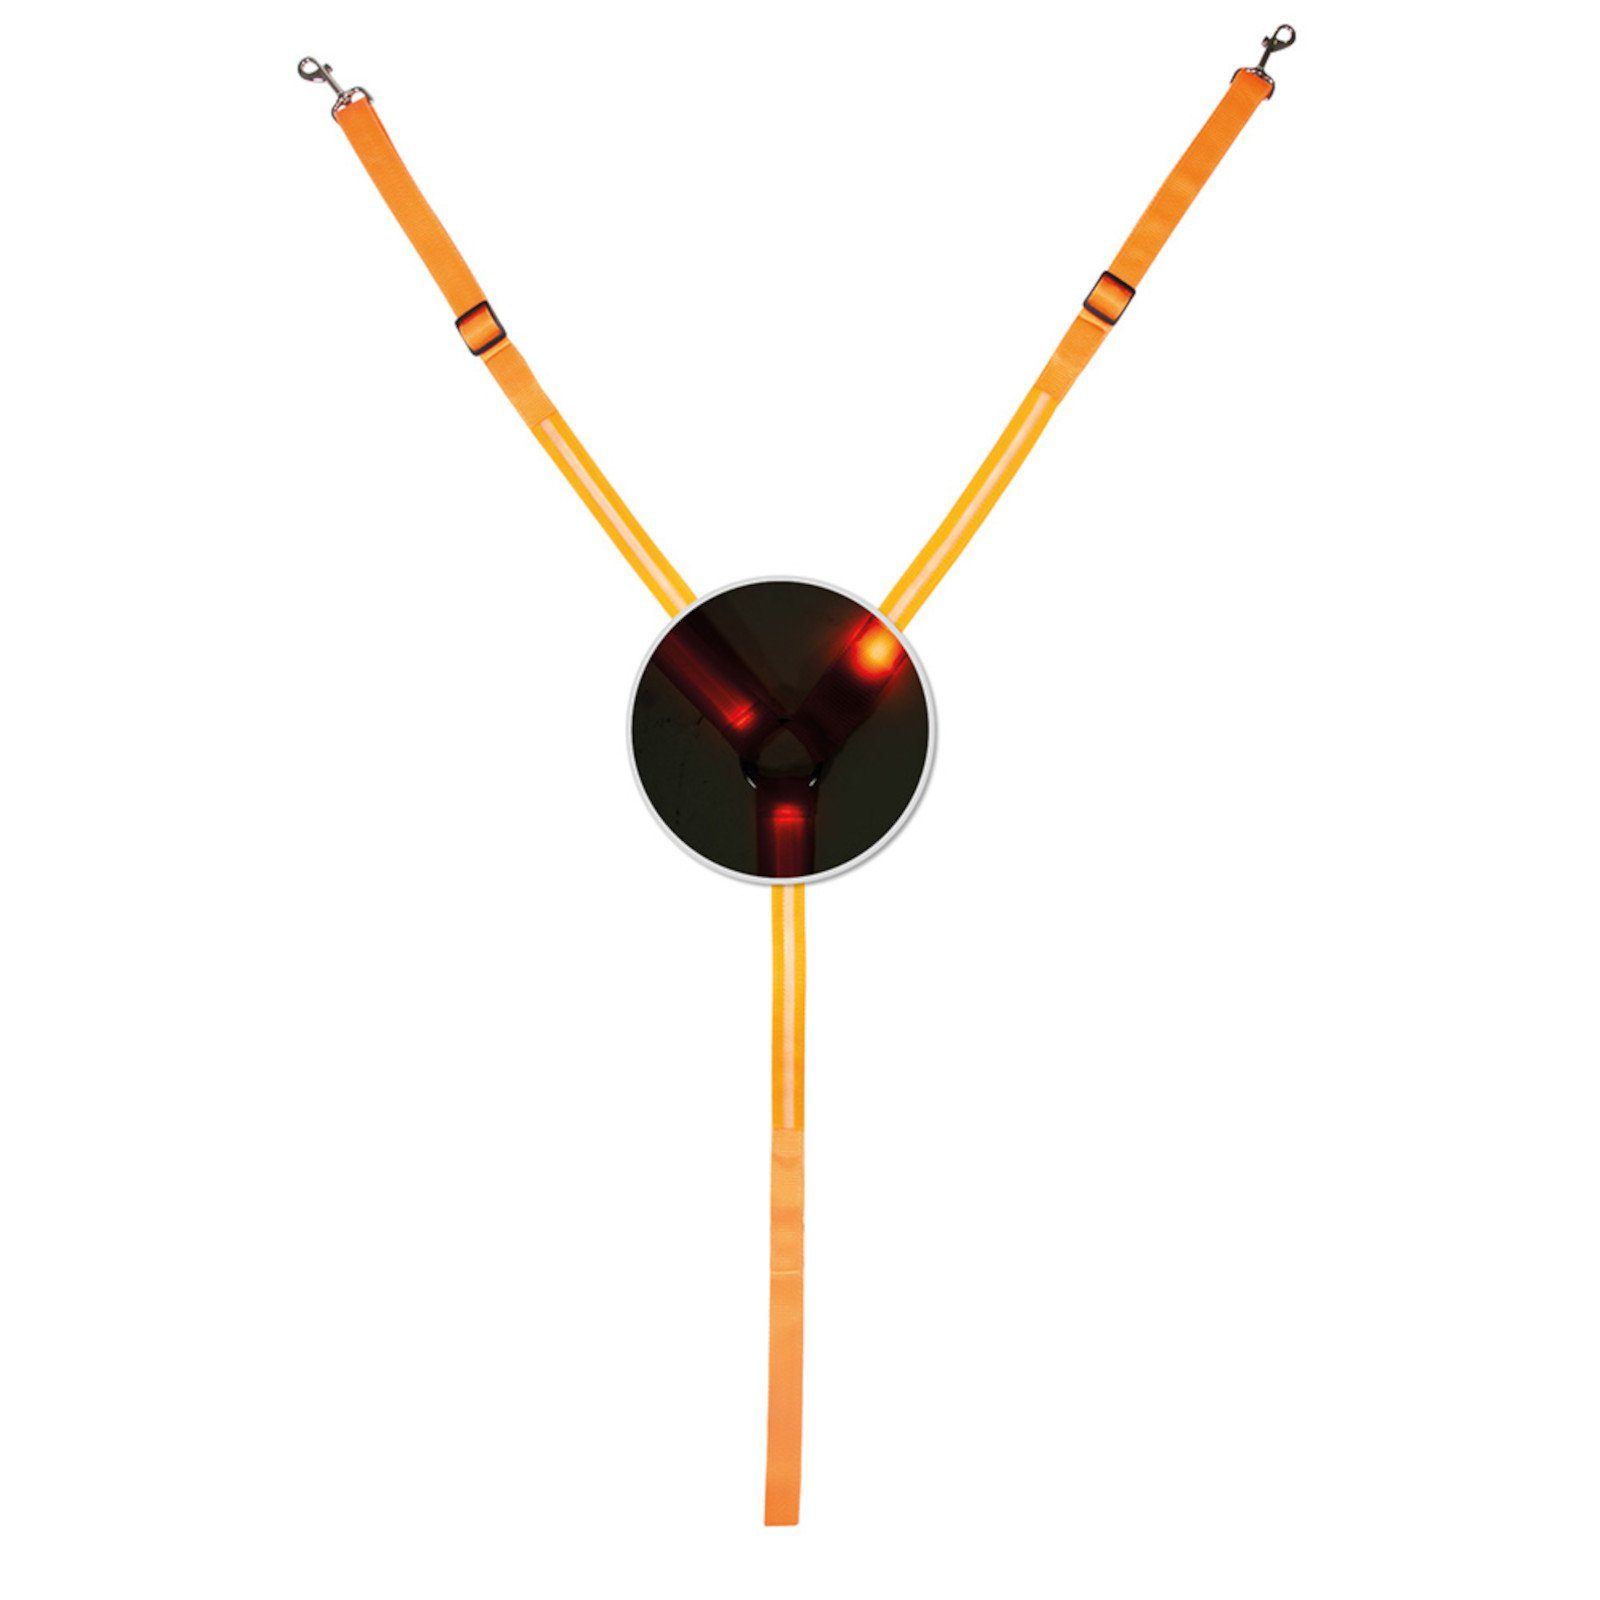 PFIFF Vorderzeug - Reflektions-Vorderzeug (orange Warmblut) Pfiff orange - Warmblut, - LED